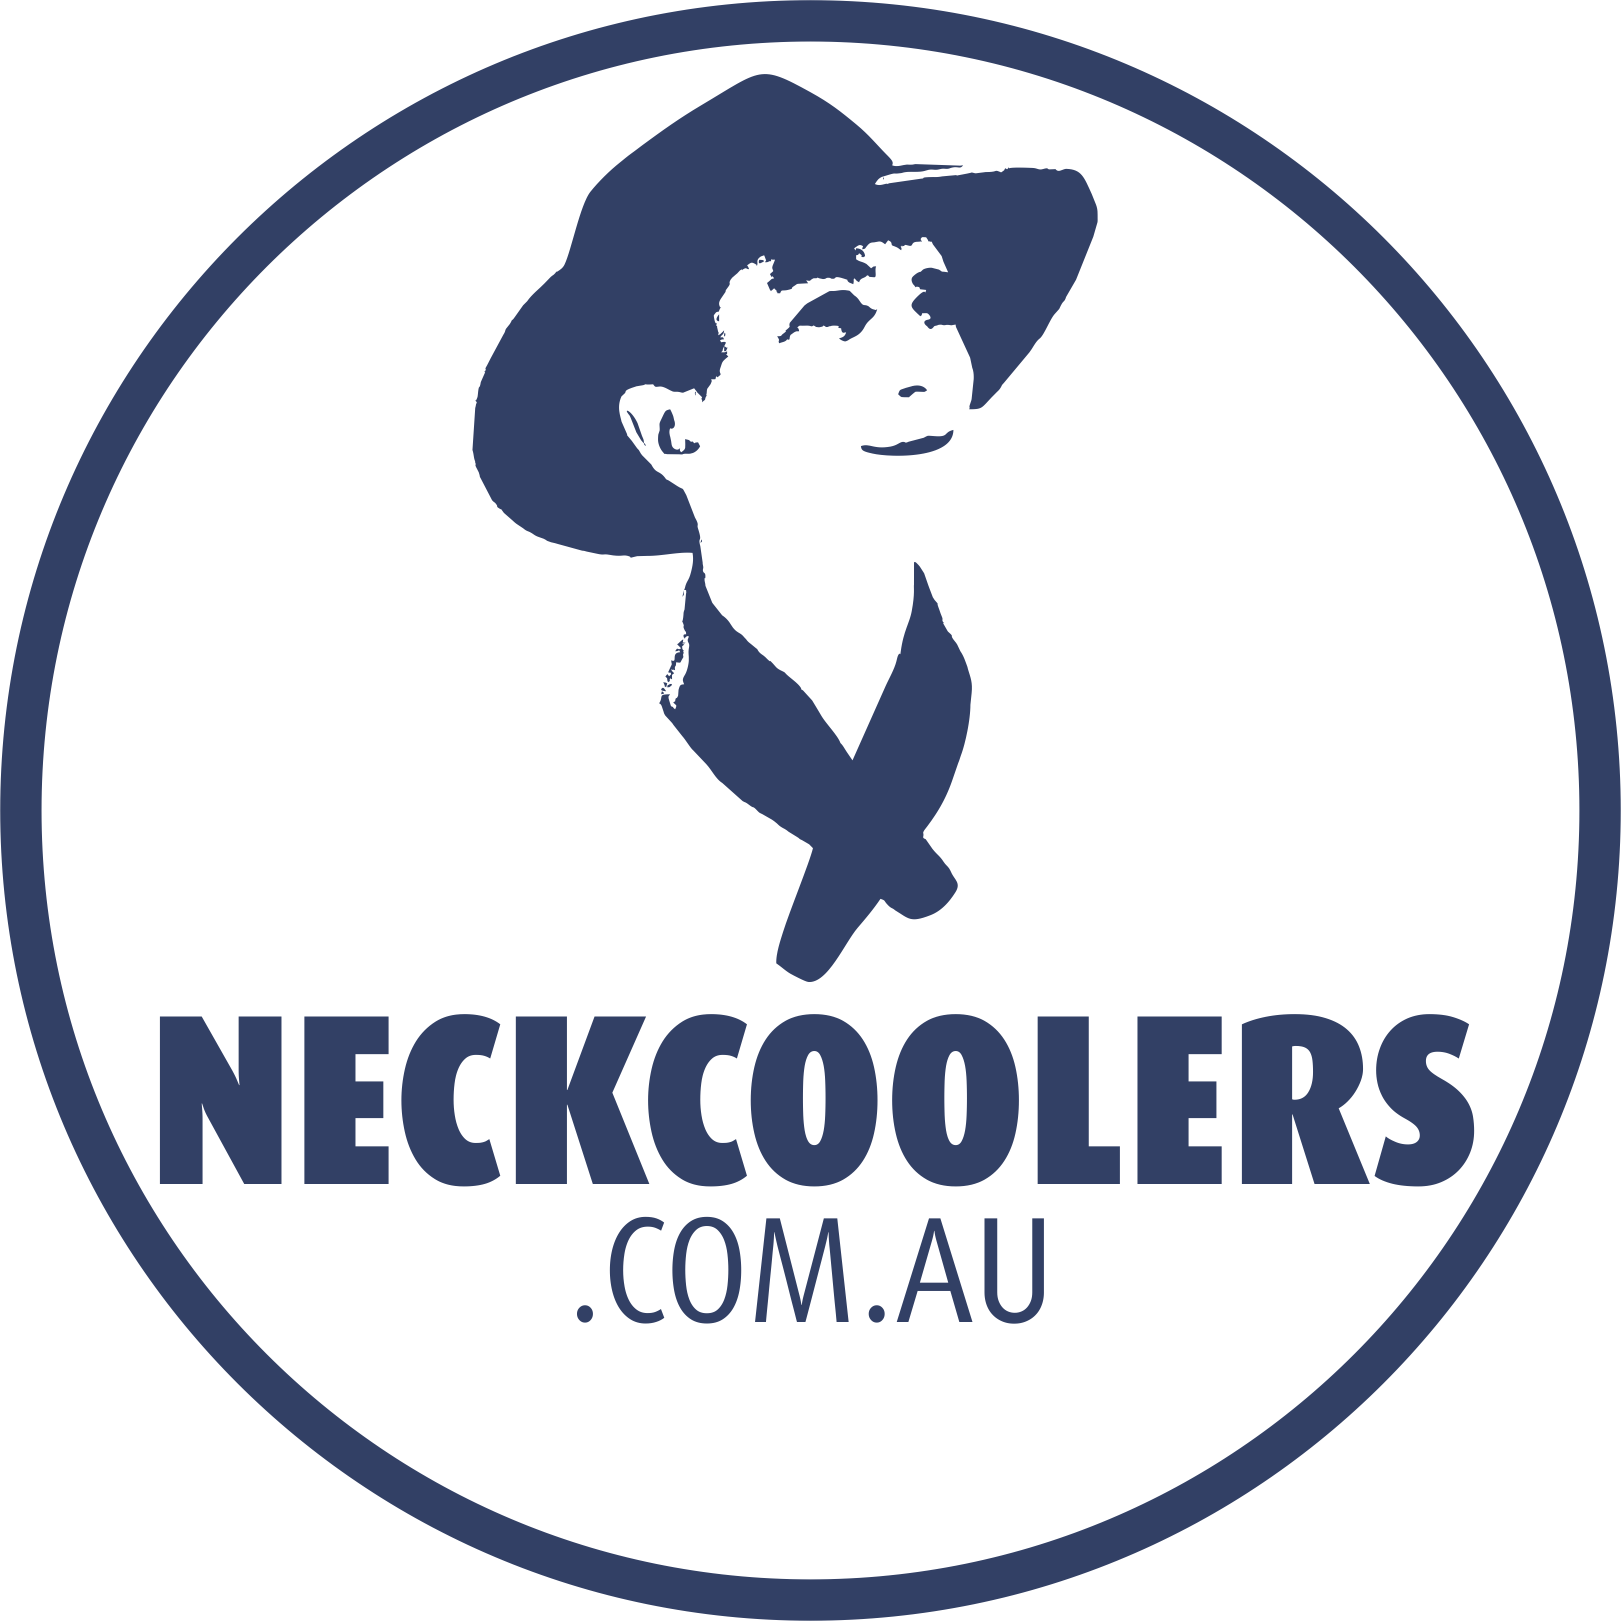 Neckcoolers.com.au